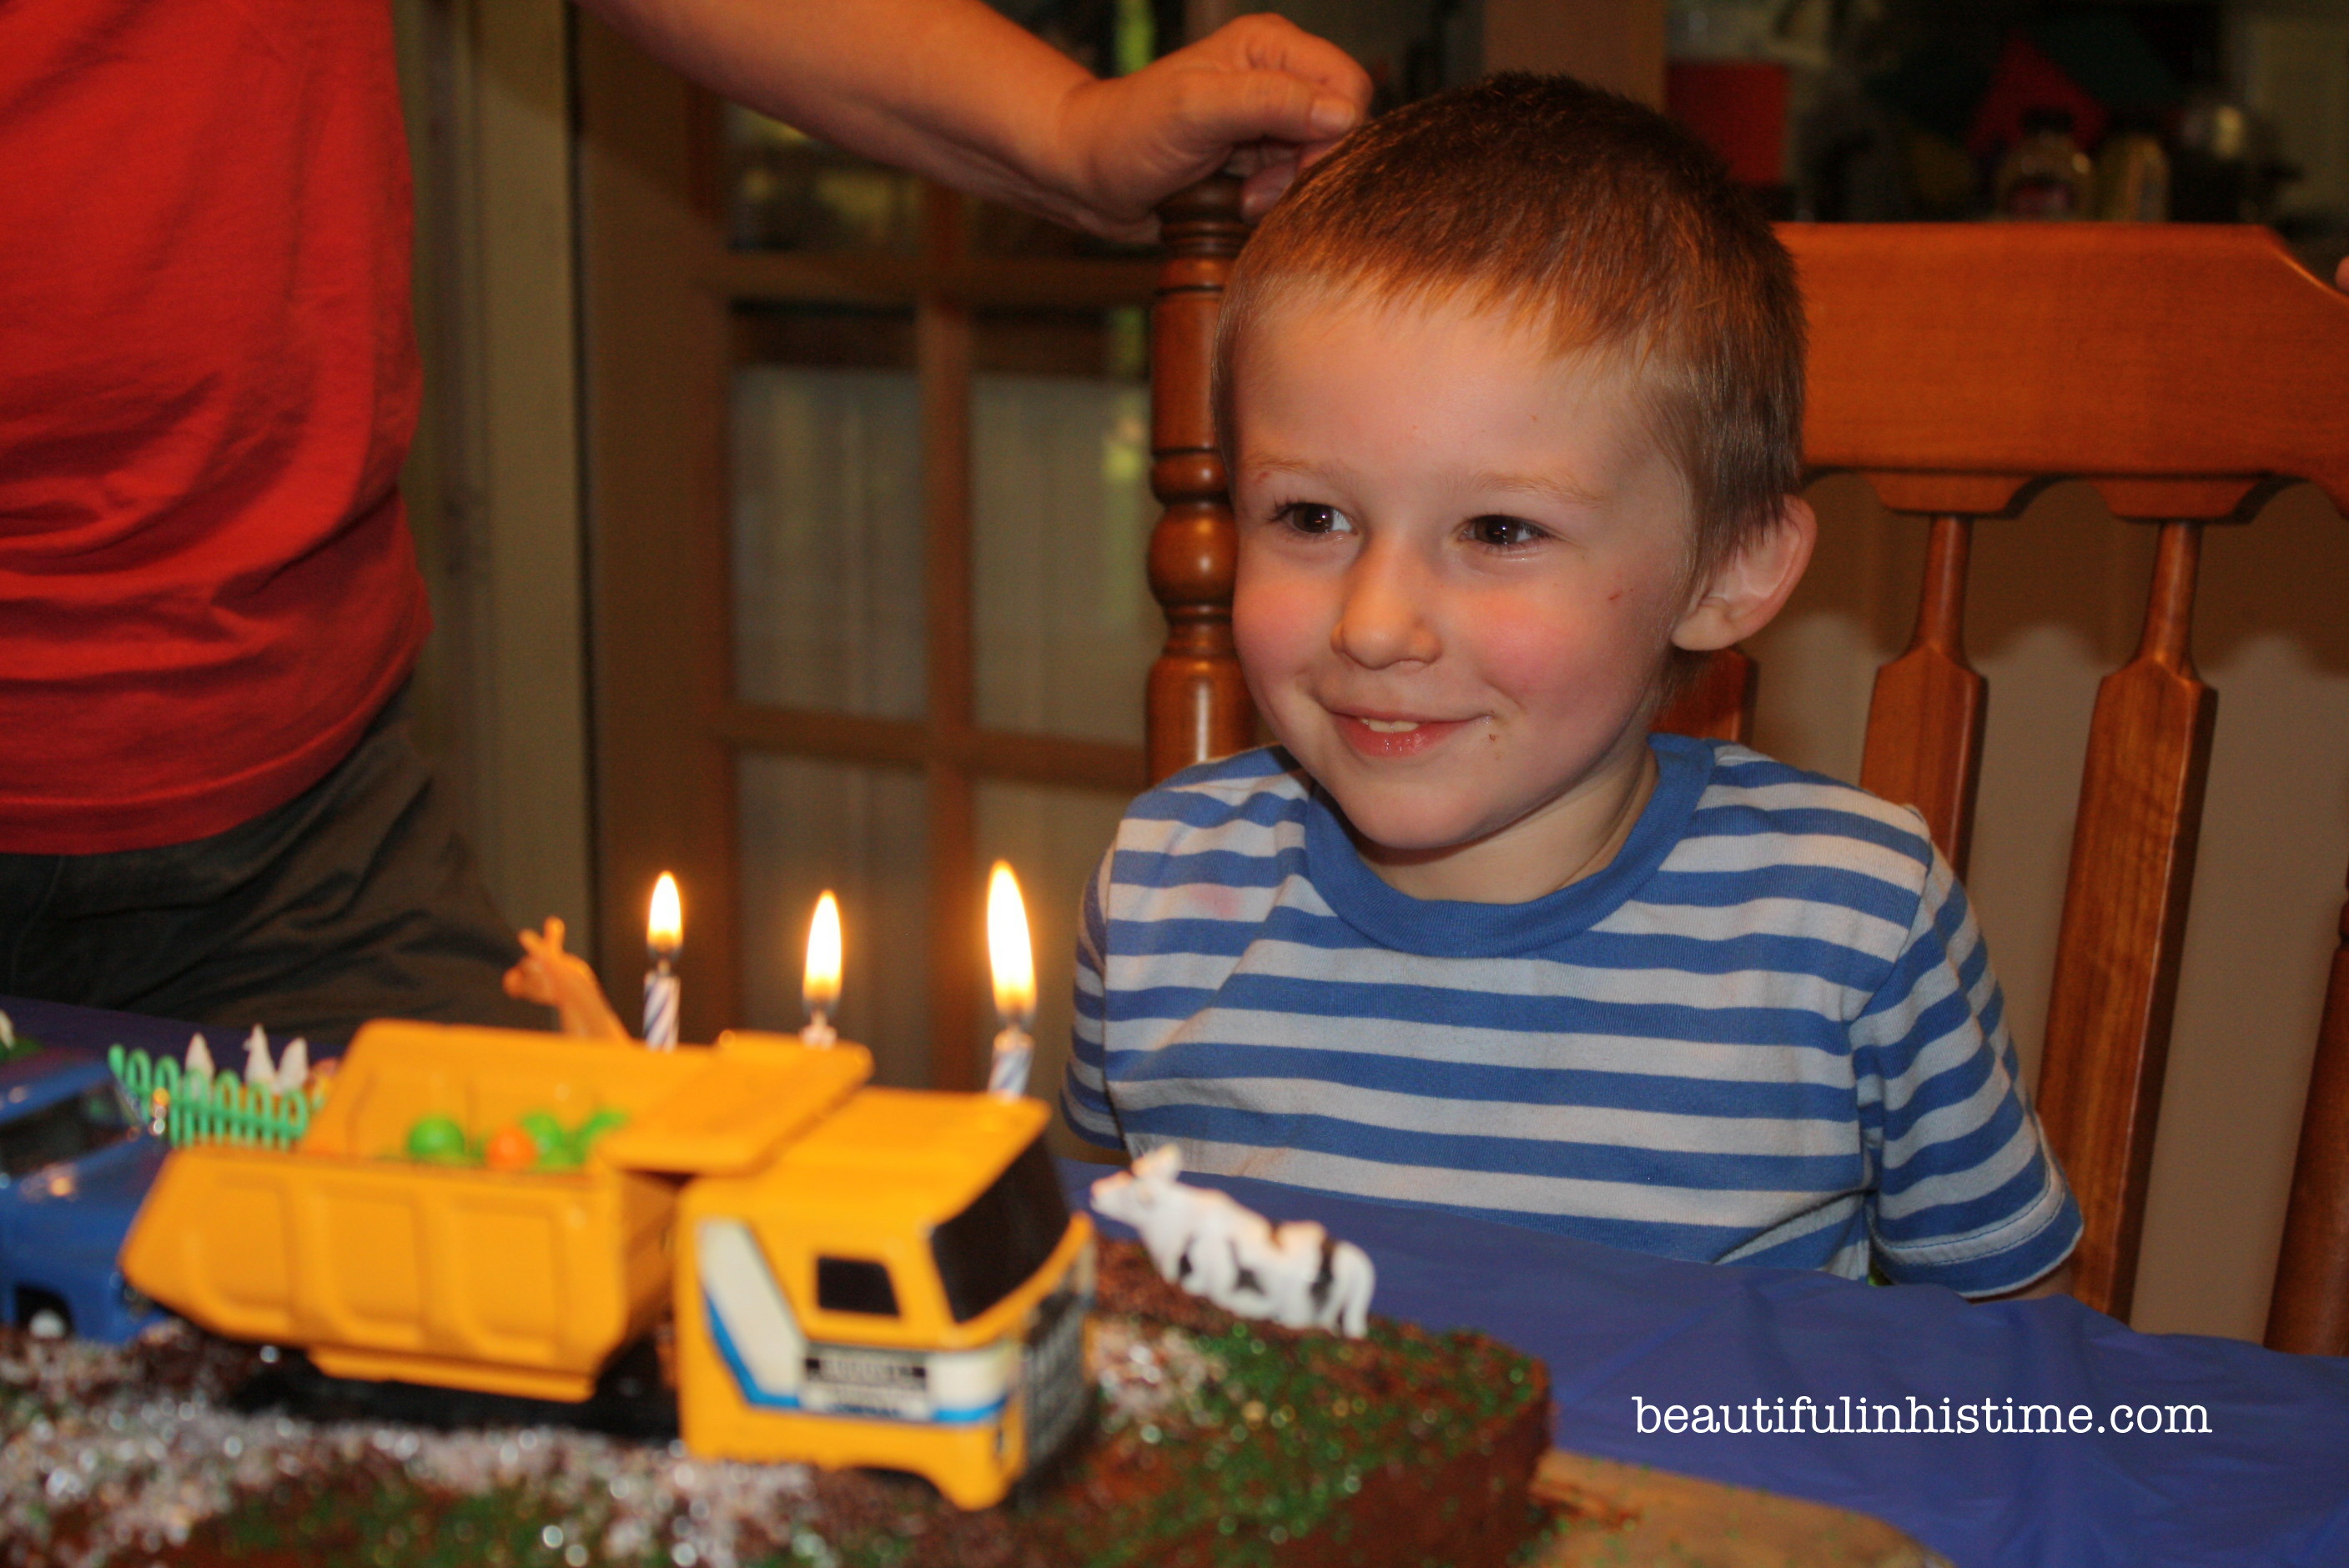 Little Blue Truck Birthday Party